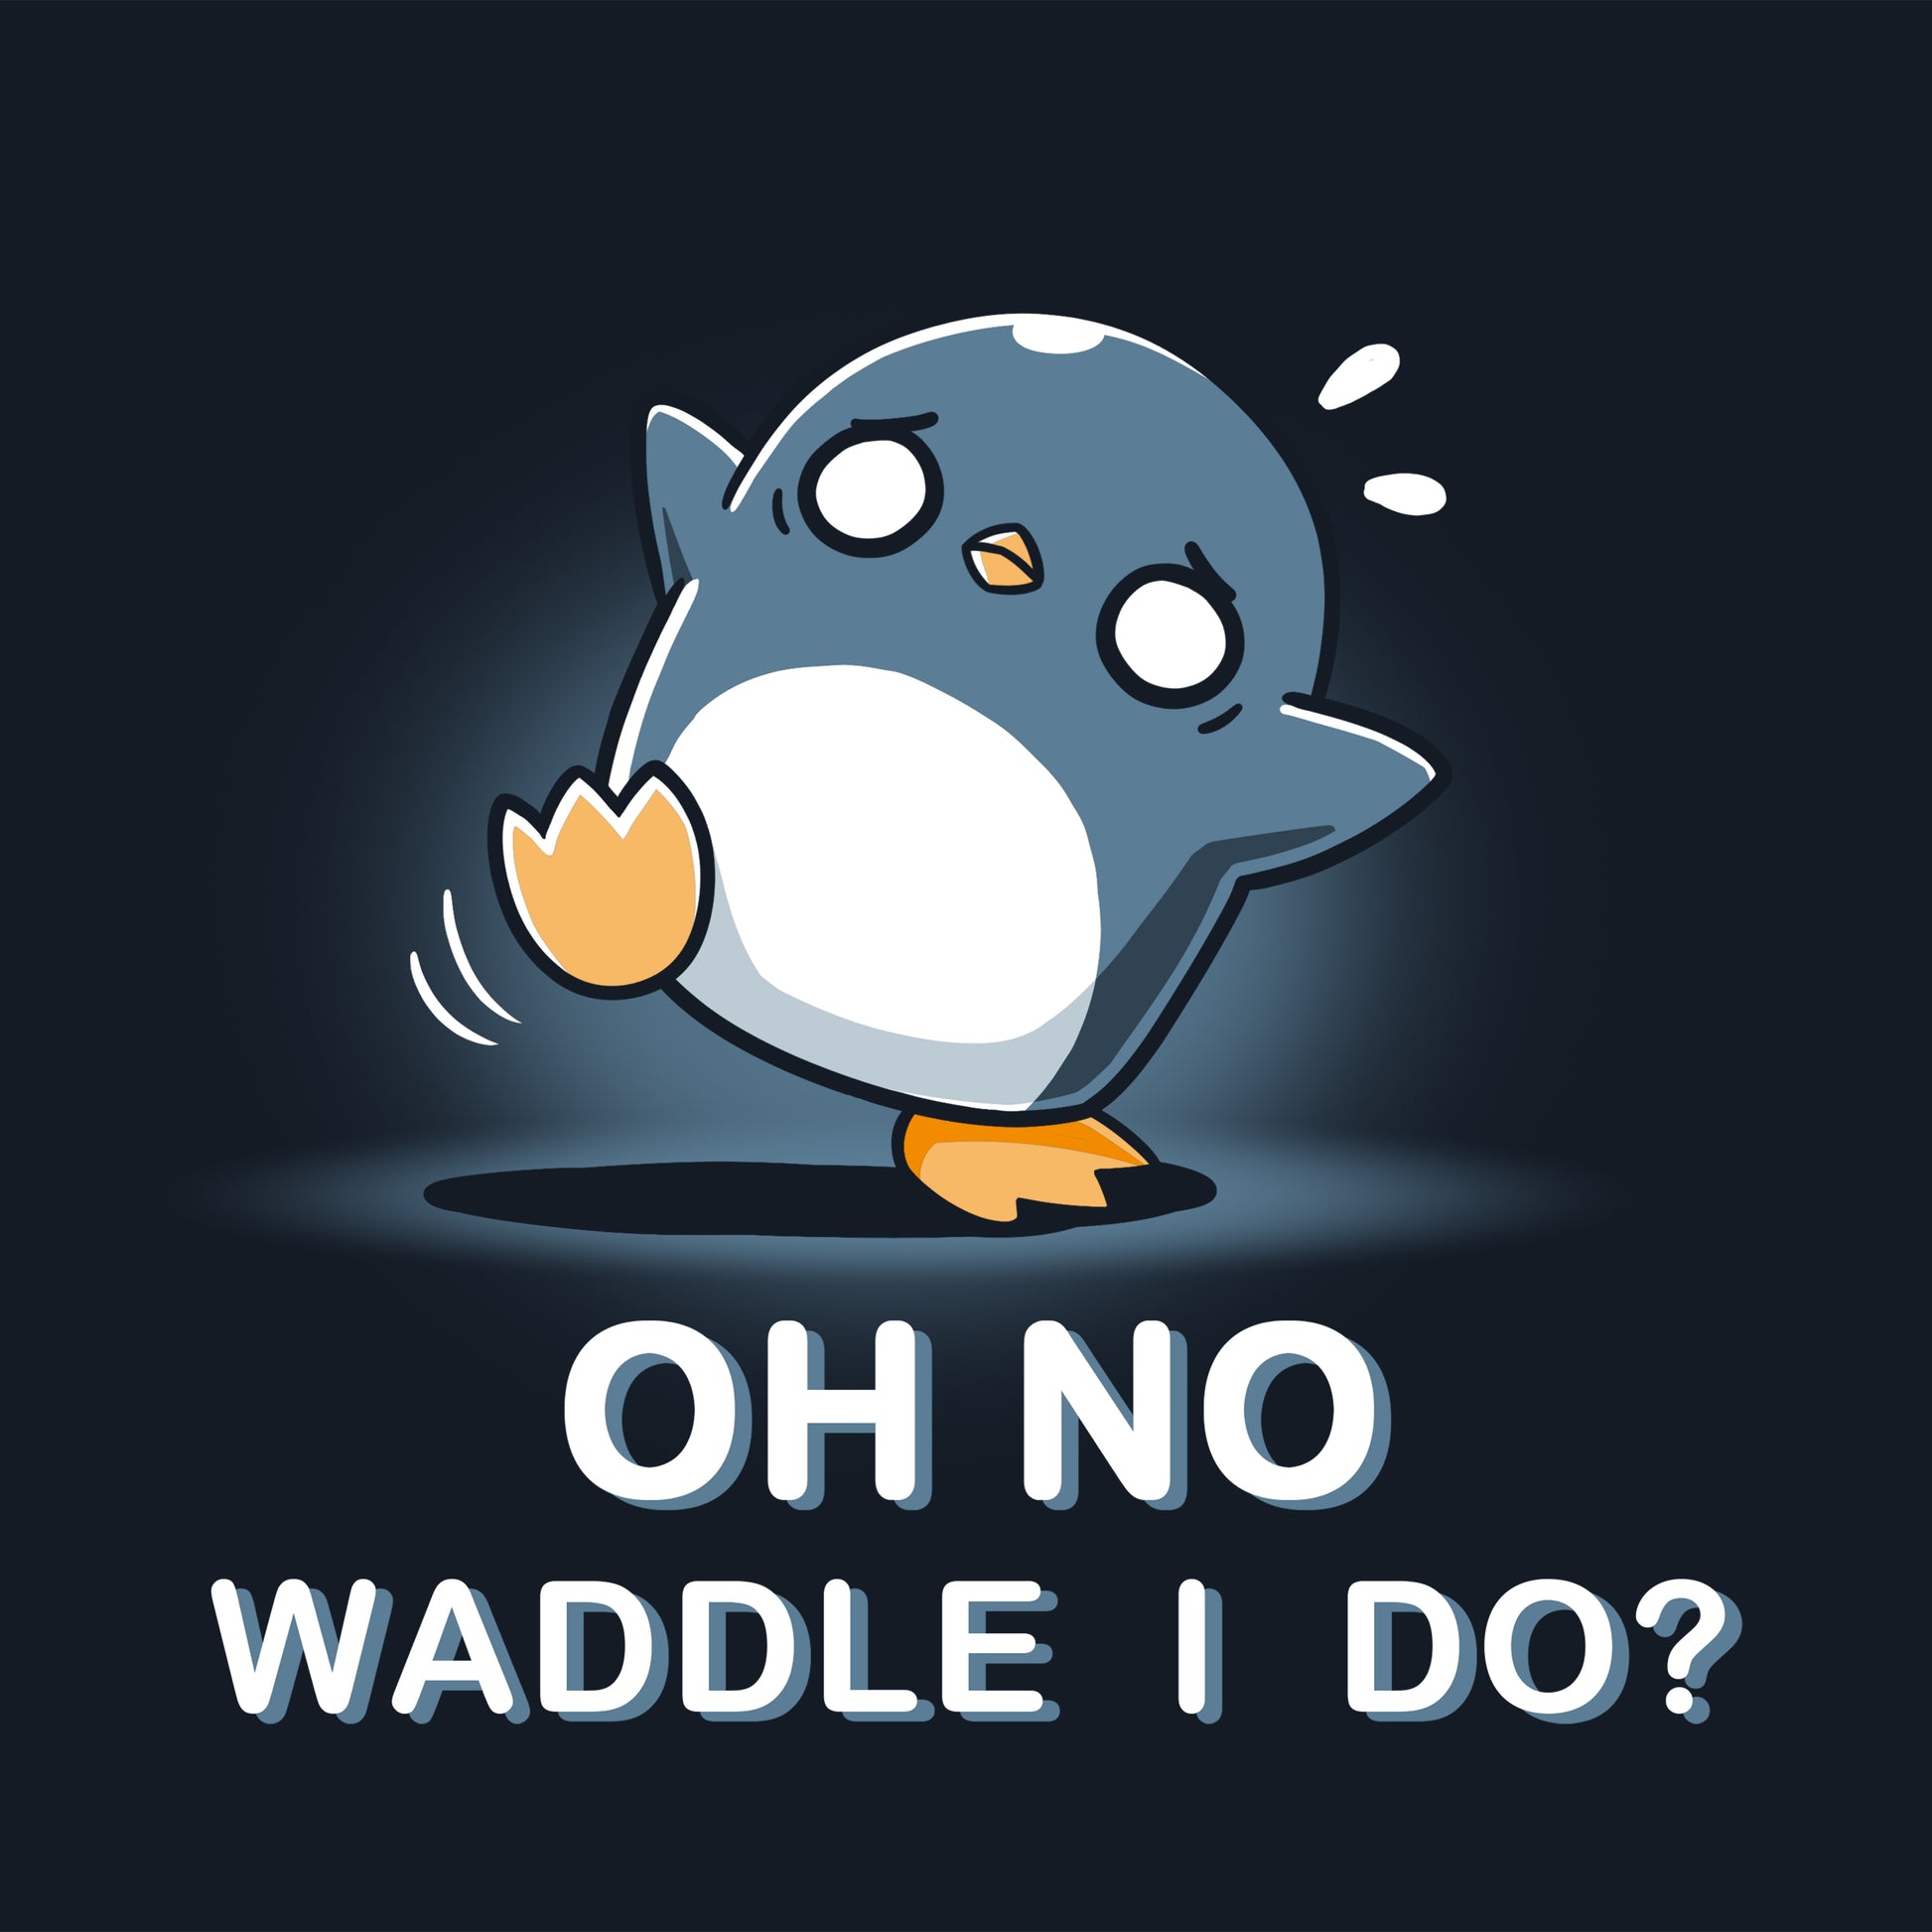 A TeeTurtle Waddle I Do? penguin stress-pacing while saying "Waddle I Do?".